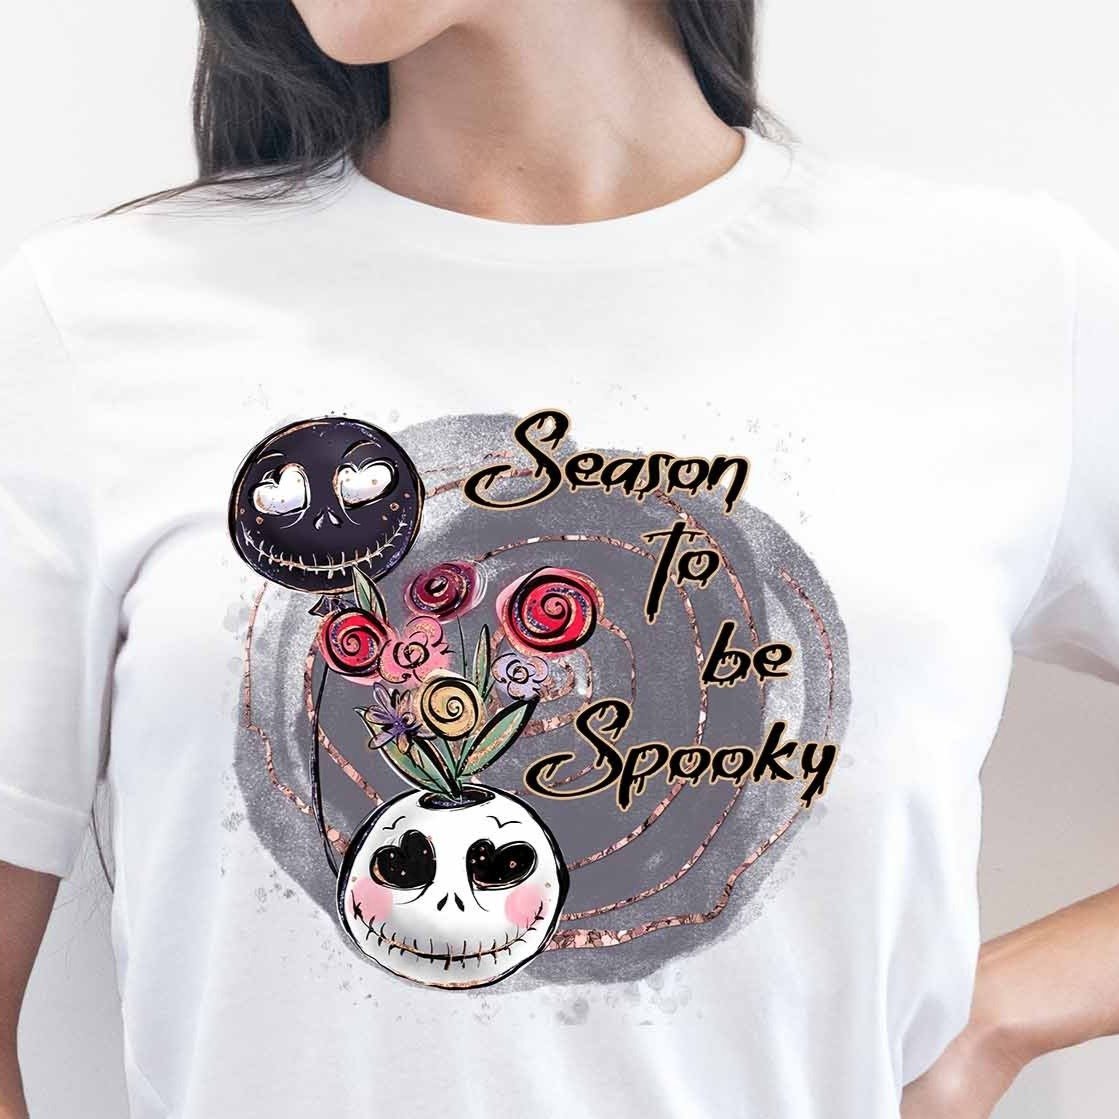 Season To Be Spooky Graphic Tee - My Custom Tee Party